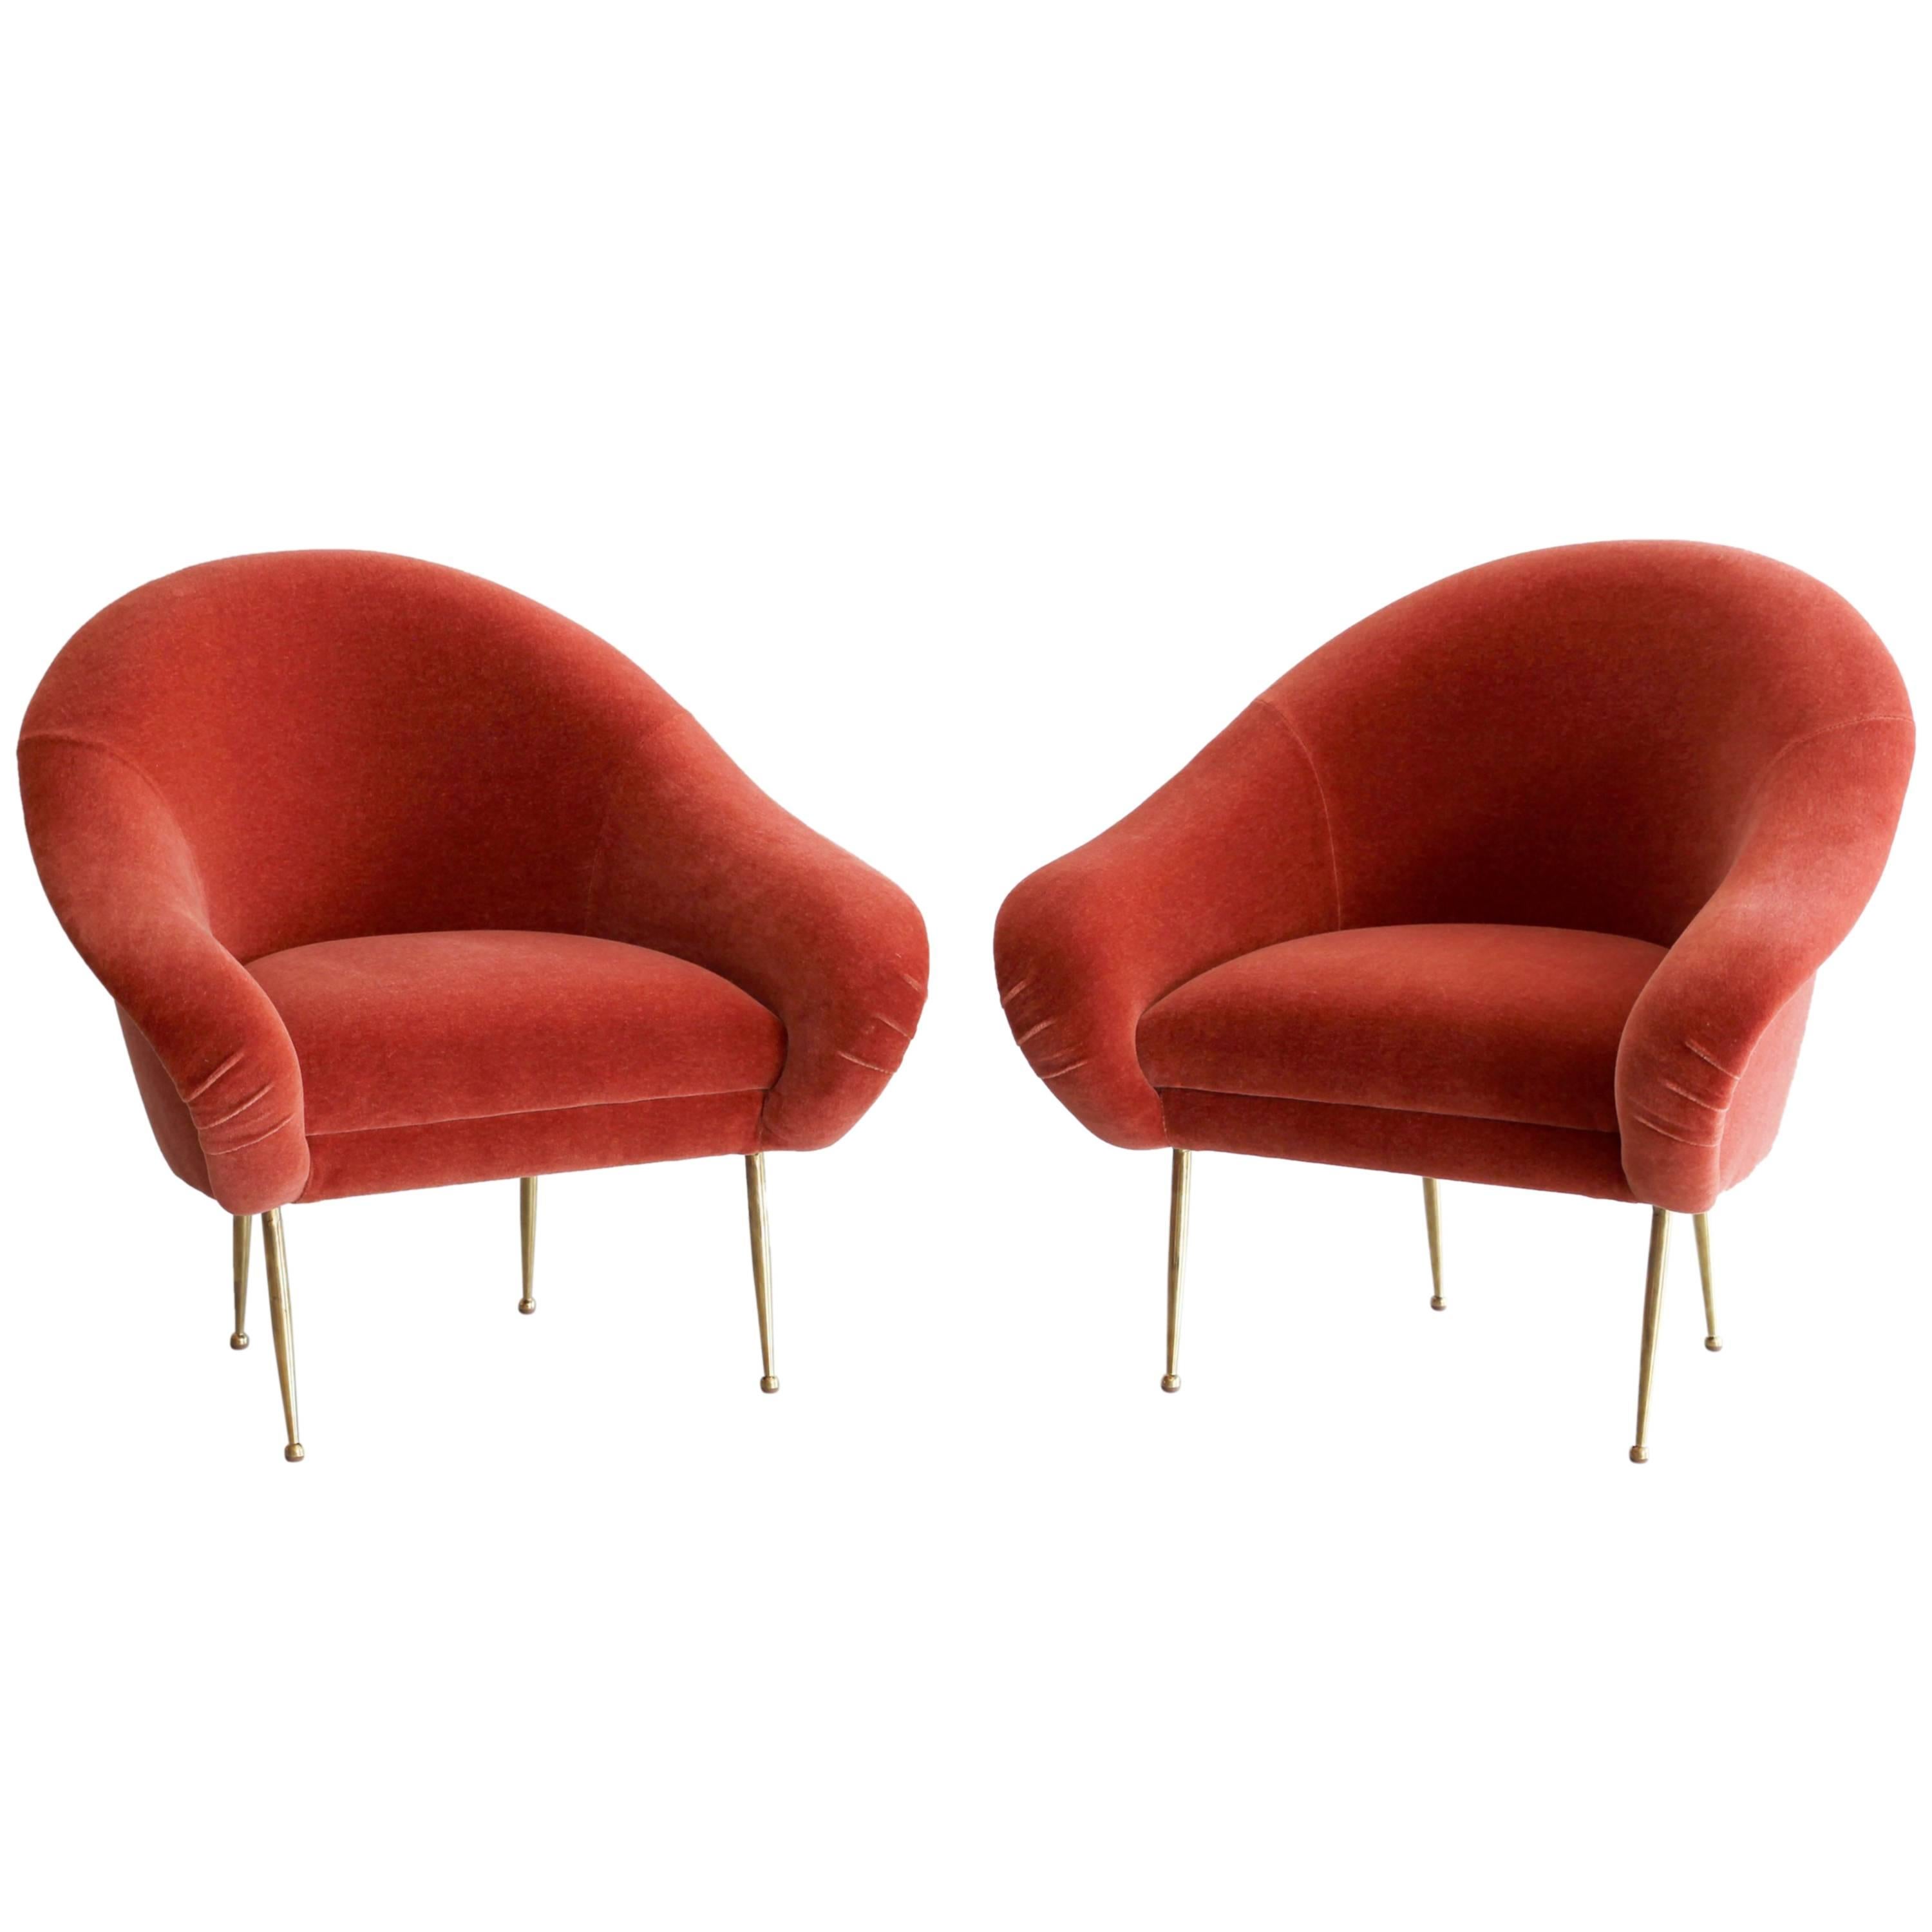 Pair of Salon Slipper Chairs